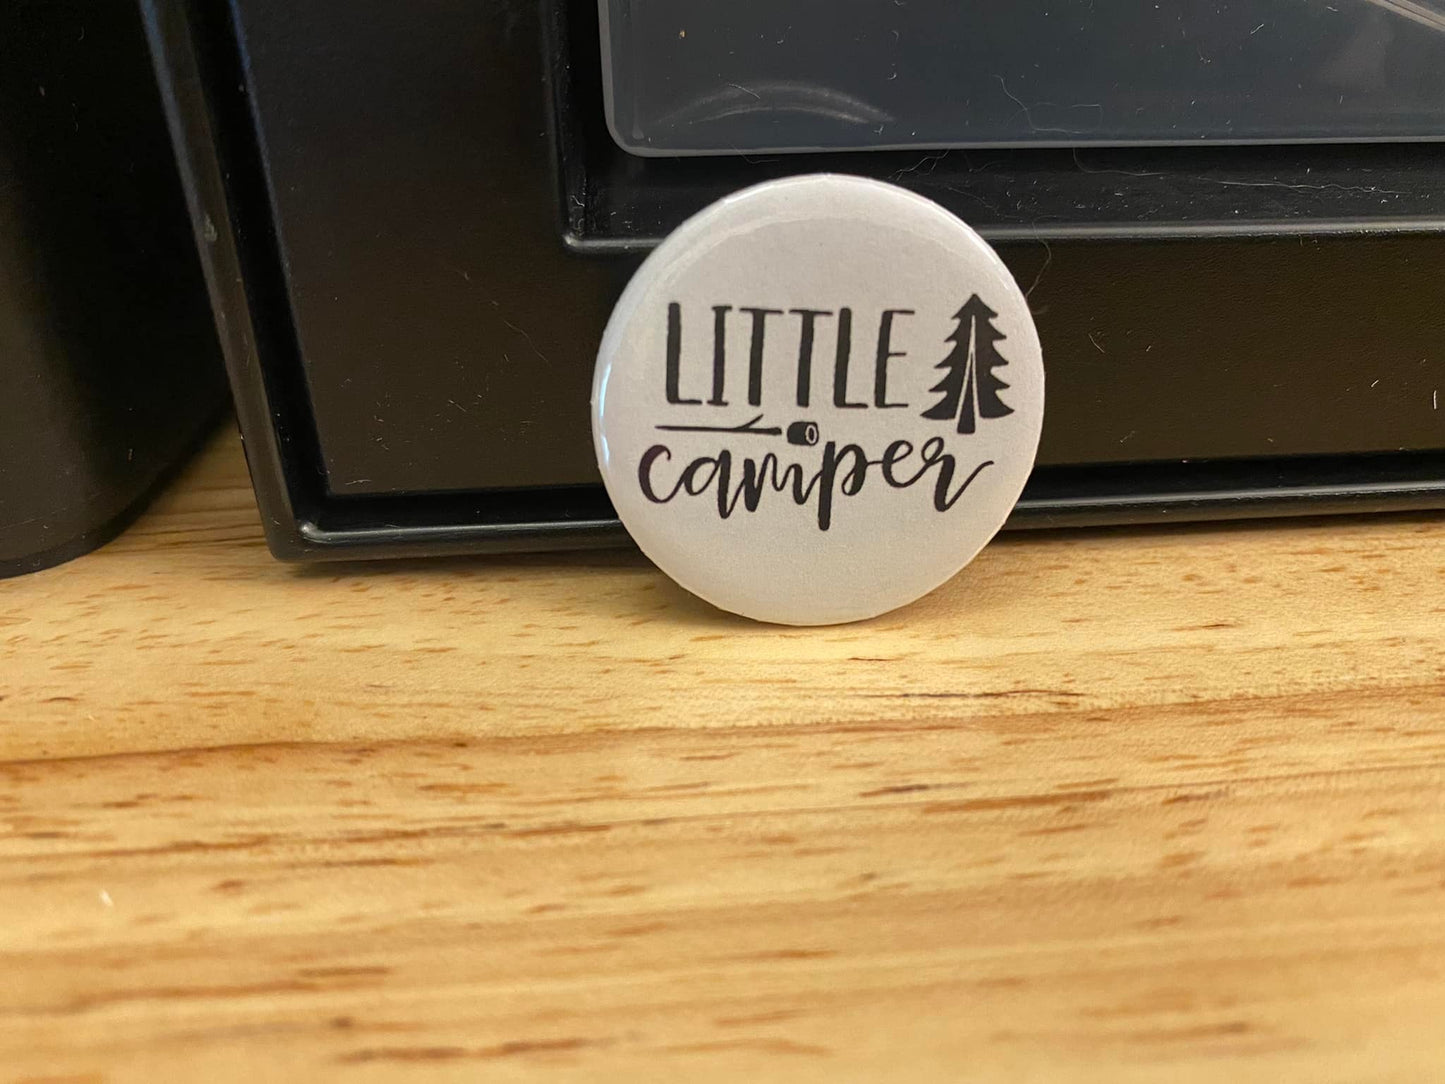 Little Camper 1.25" / 2.25" Button Pin